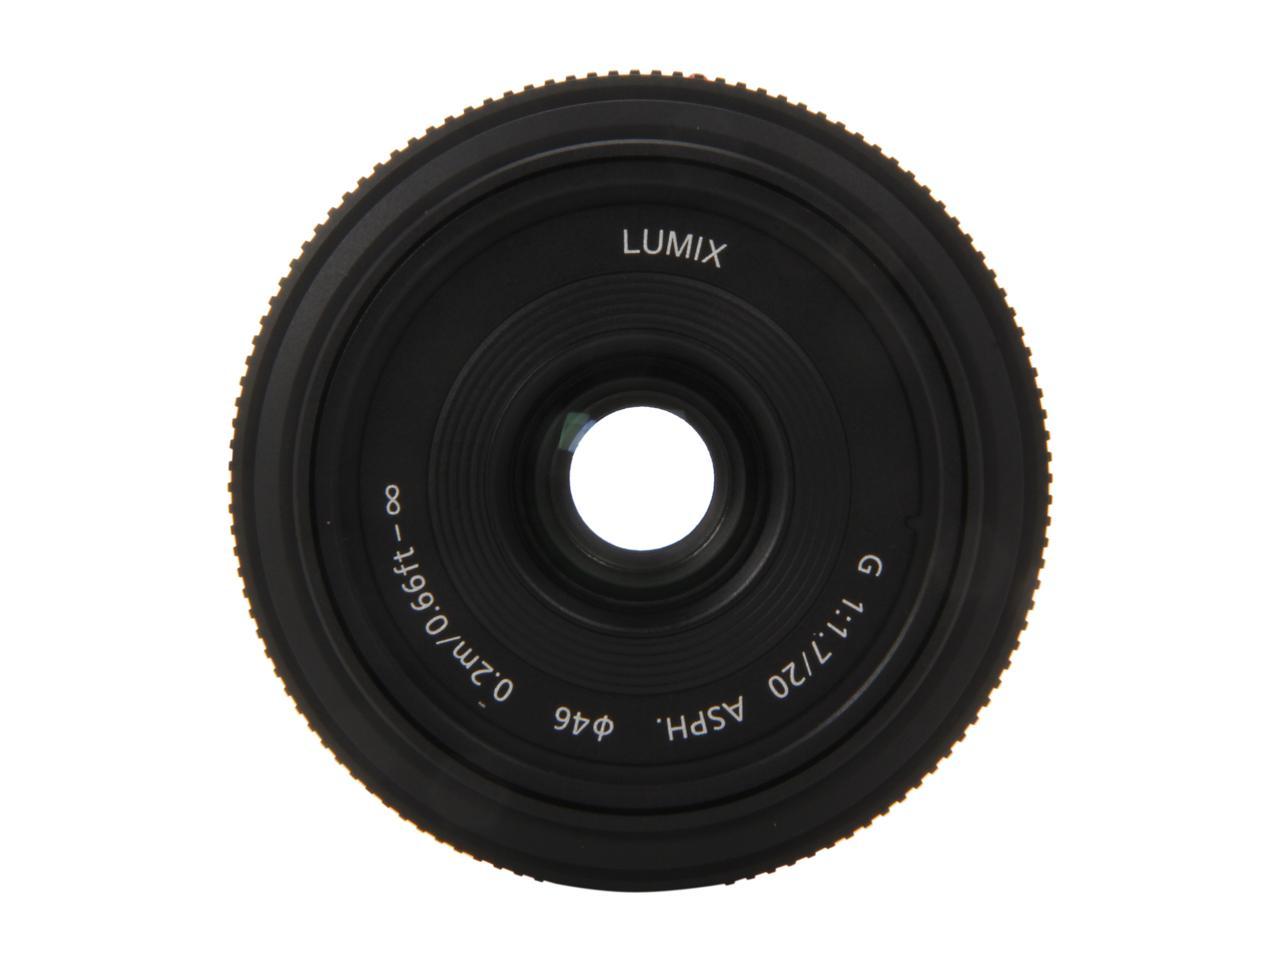 Panasonic H-H020 Lumix G 20mm / F1.7 ASPH Lens - Newegg.com